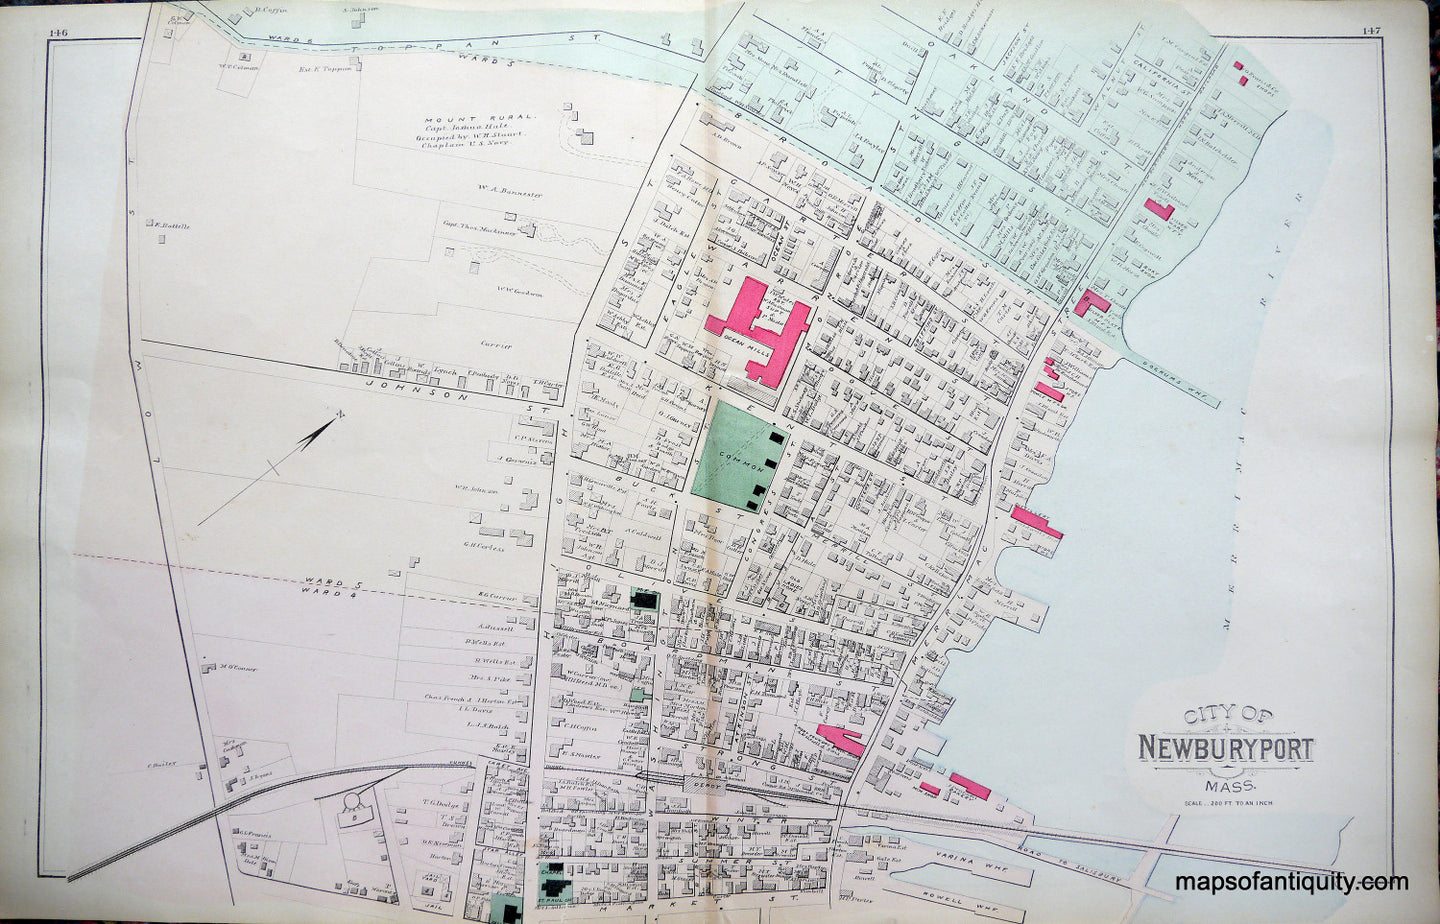 Antique-Hand-Colored-Map-City-of-Newburyport-Massachusetts-****-United-States-Massachusetts-1884-Walker-Maps-Of-Antiquity